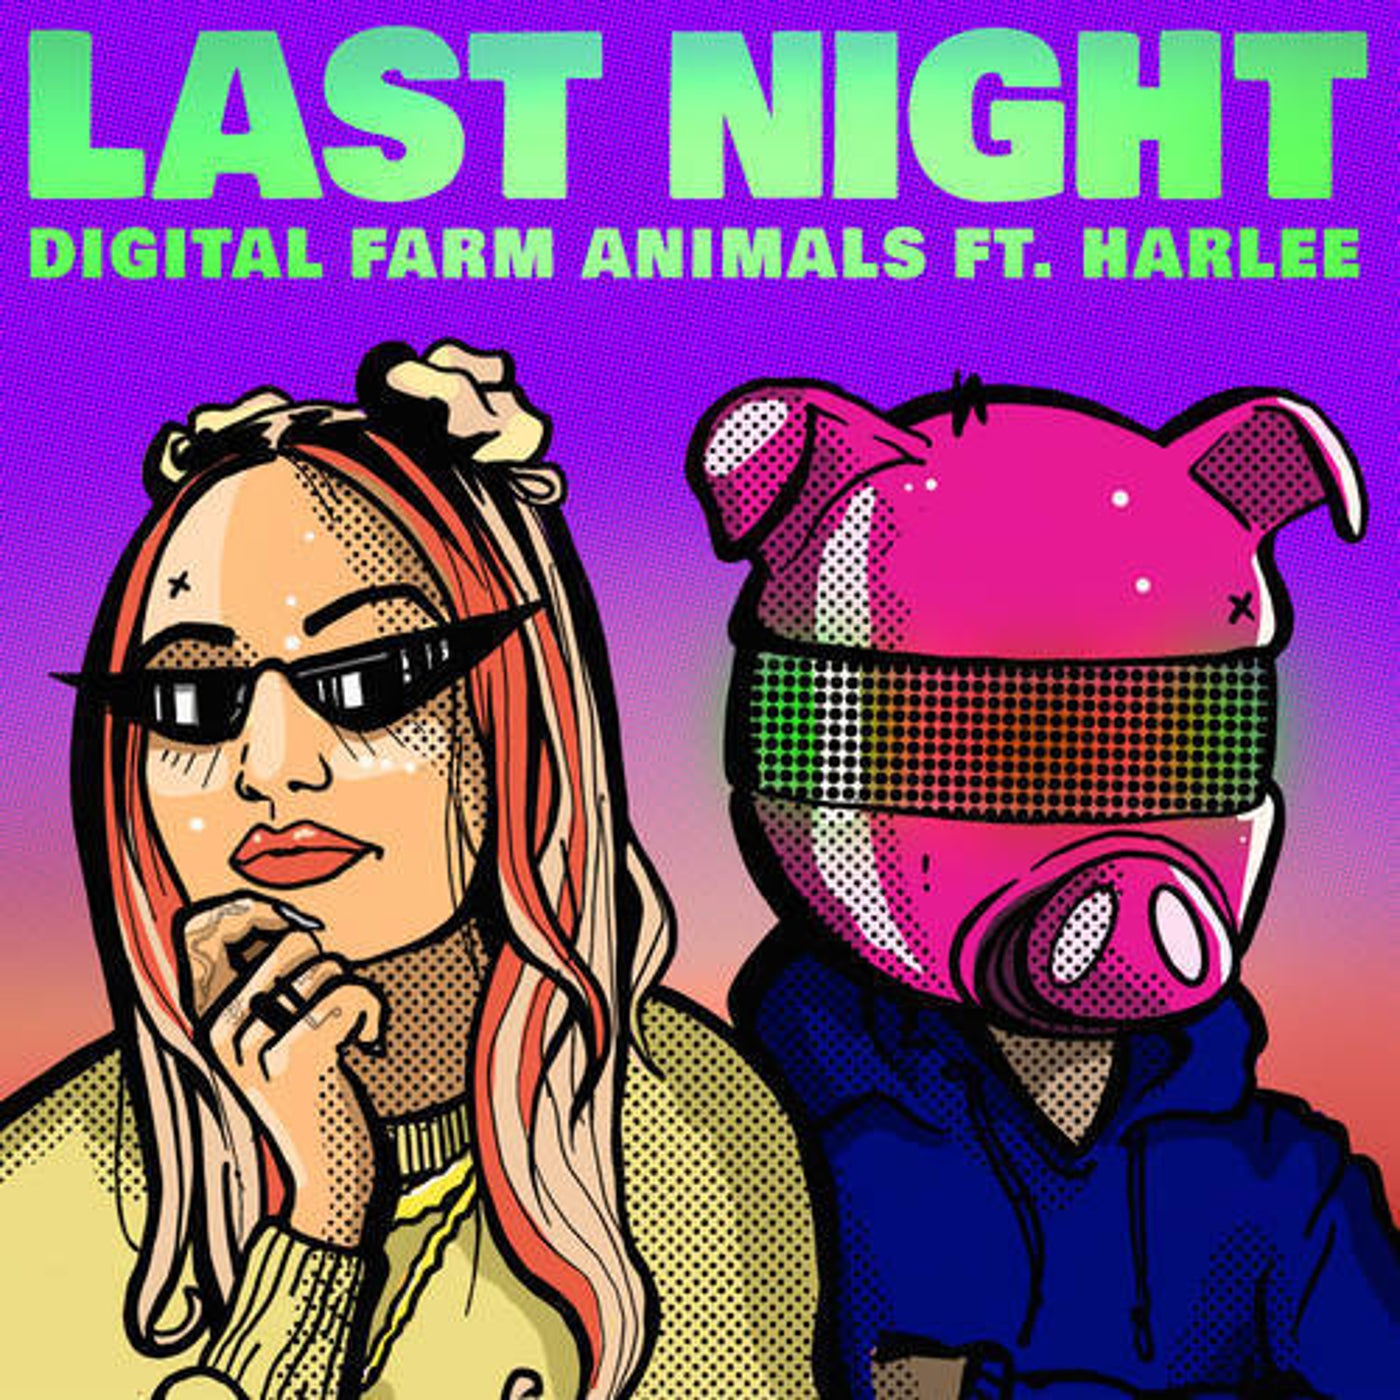 Digital Farm Animals music download - Beatport